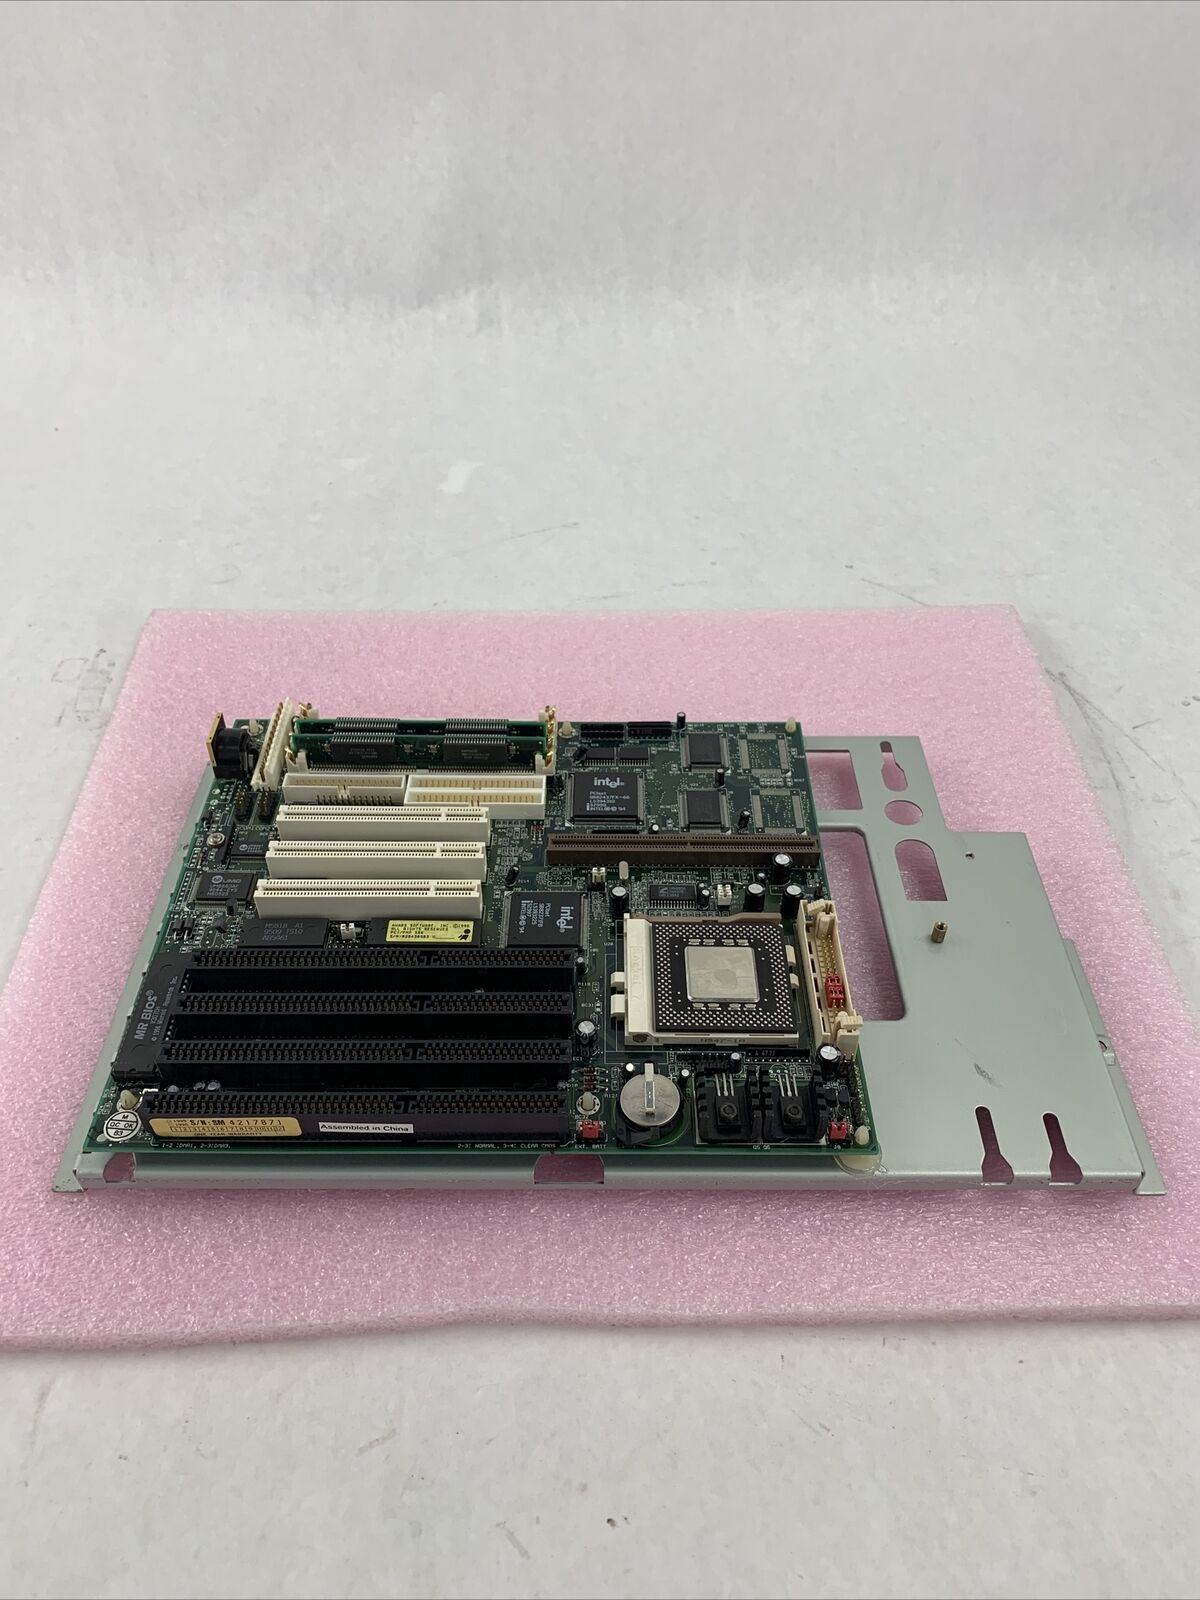 FUGITech 430FX MB Intel Pentium MMX 100MHz 16MB RAM